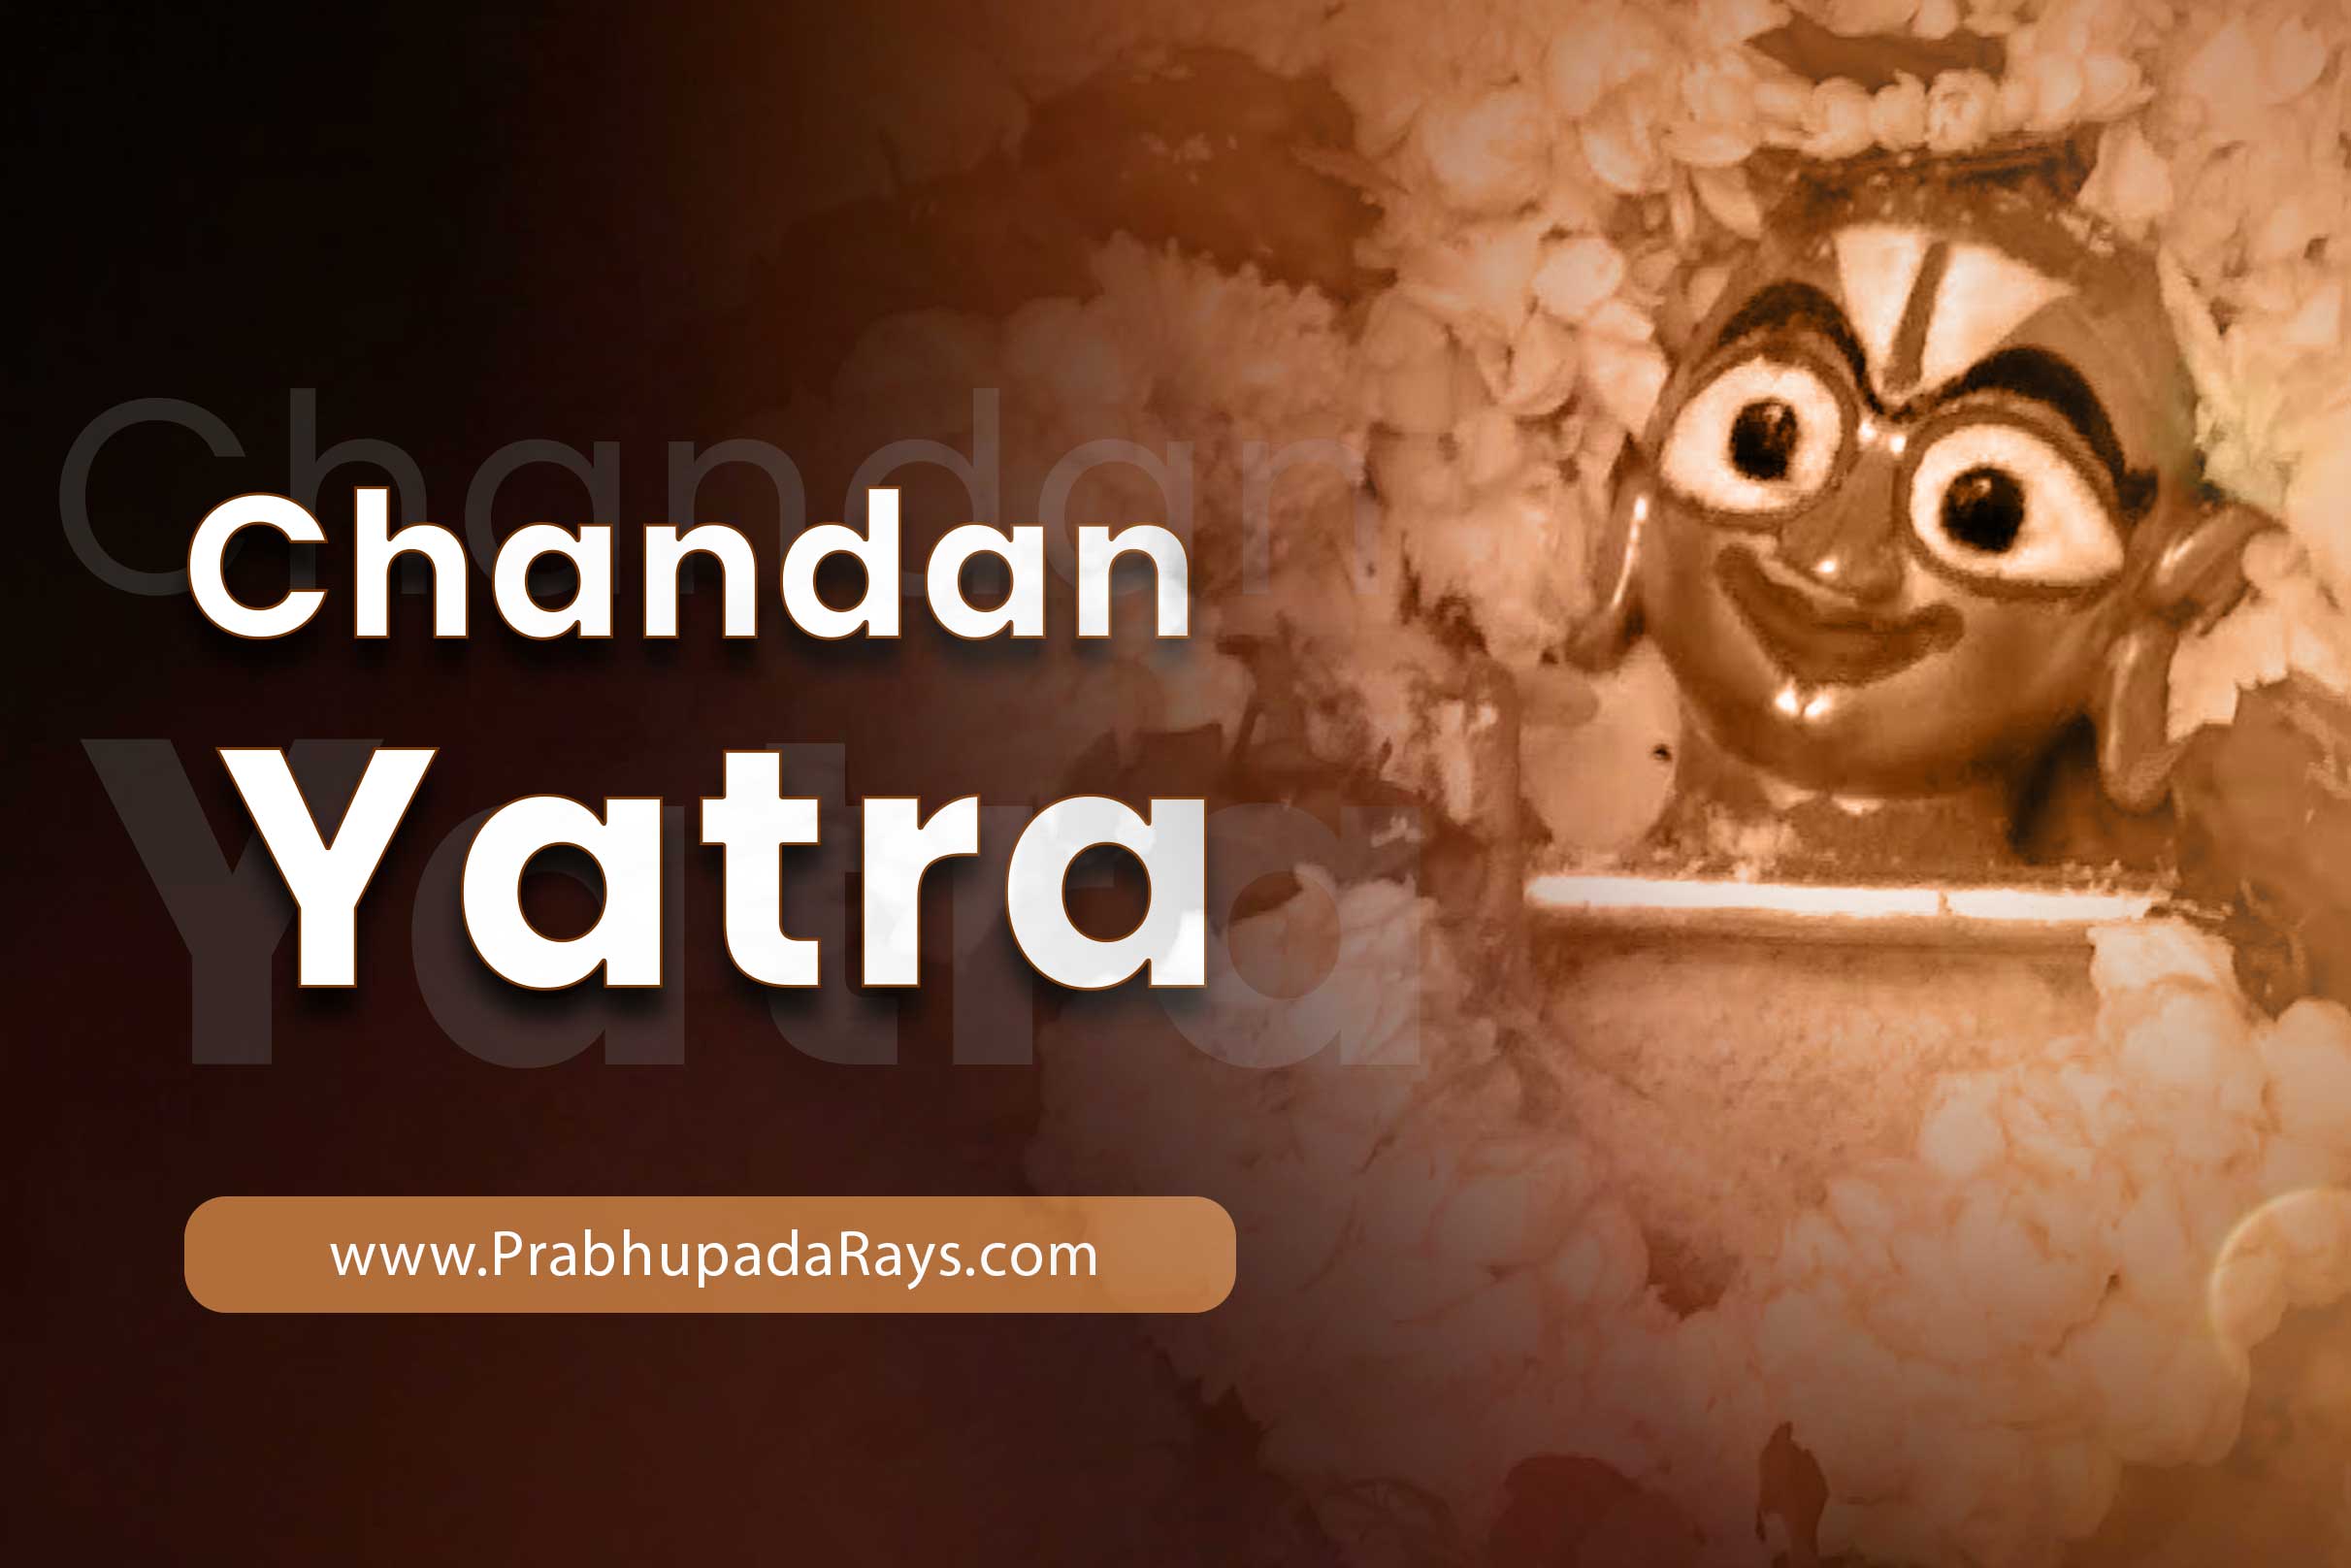 Chandan Yatra - Prabhupada Rays